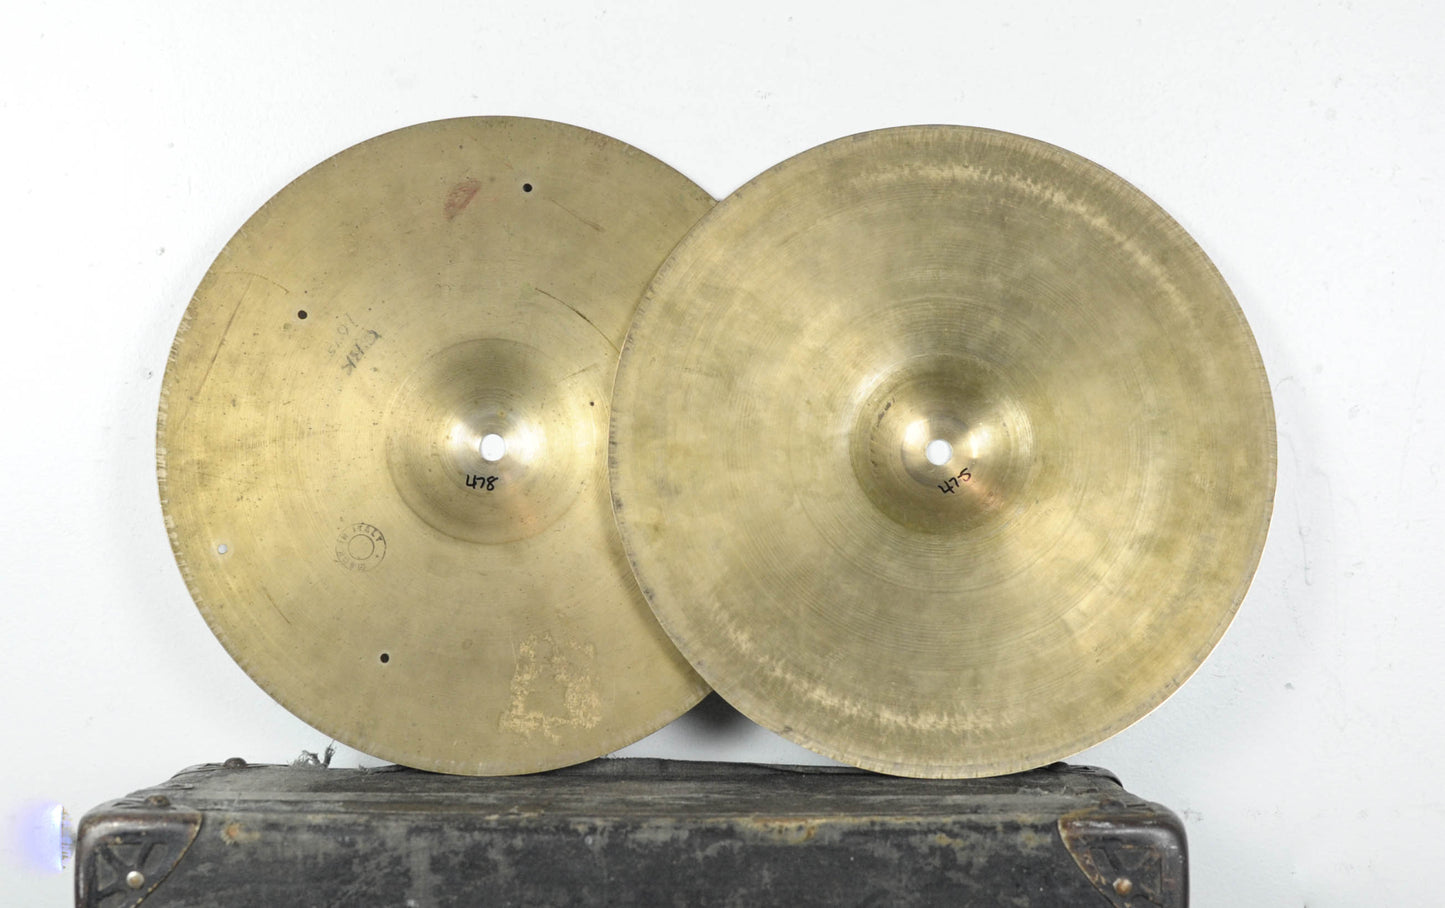 Vintage Italian 13" Paper Thin Hi Hat Cymbals 475g 478g